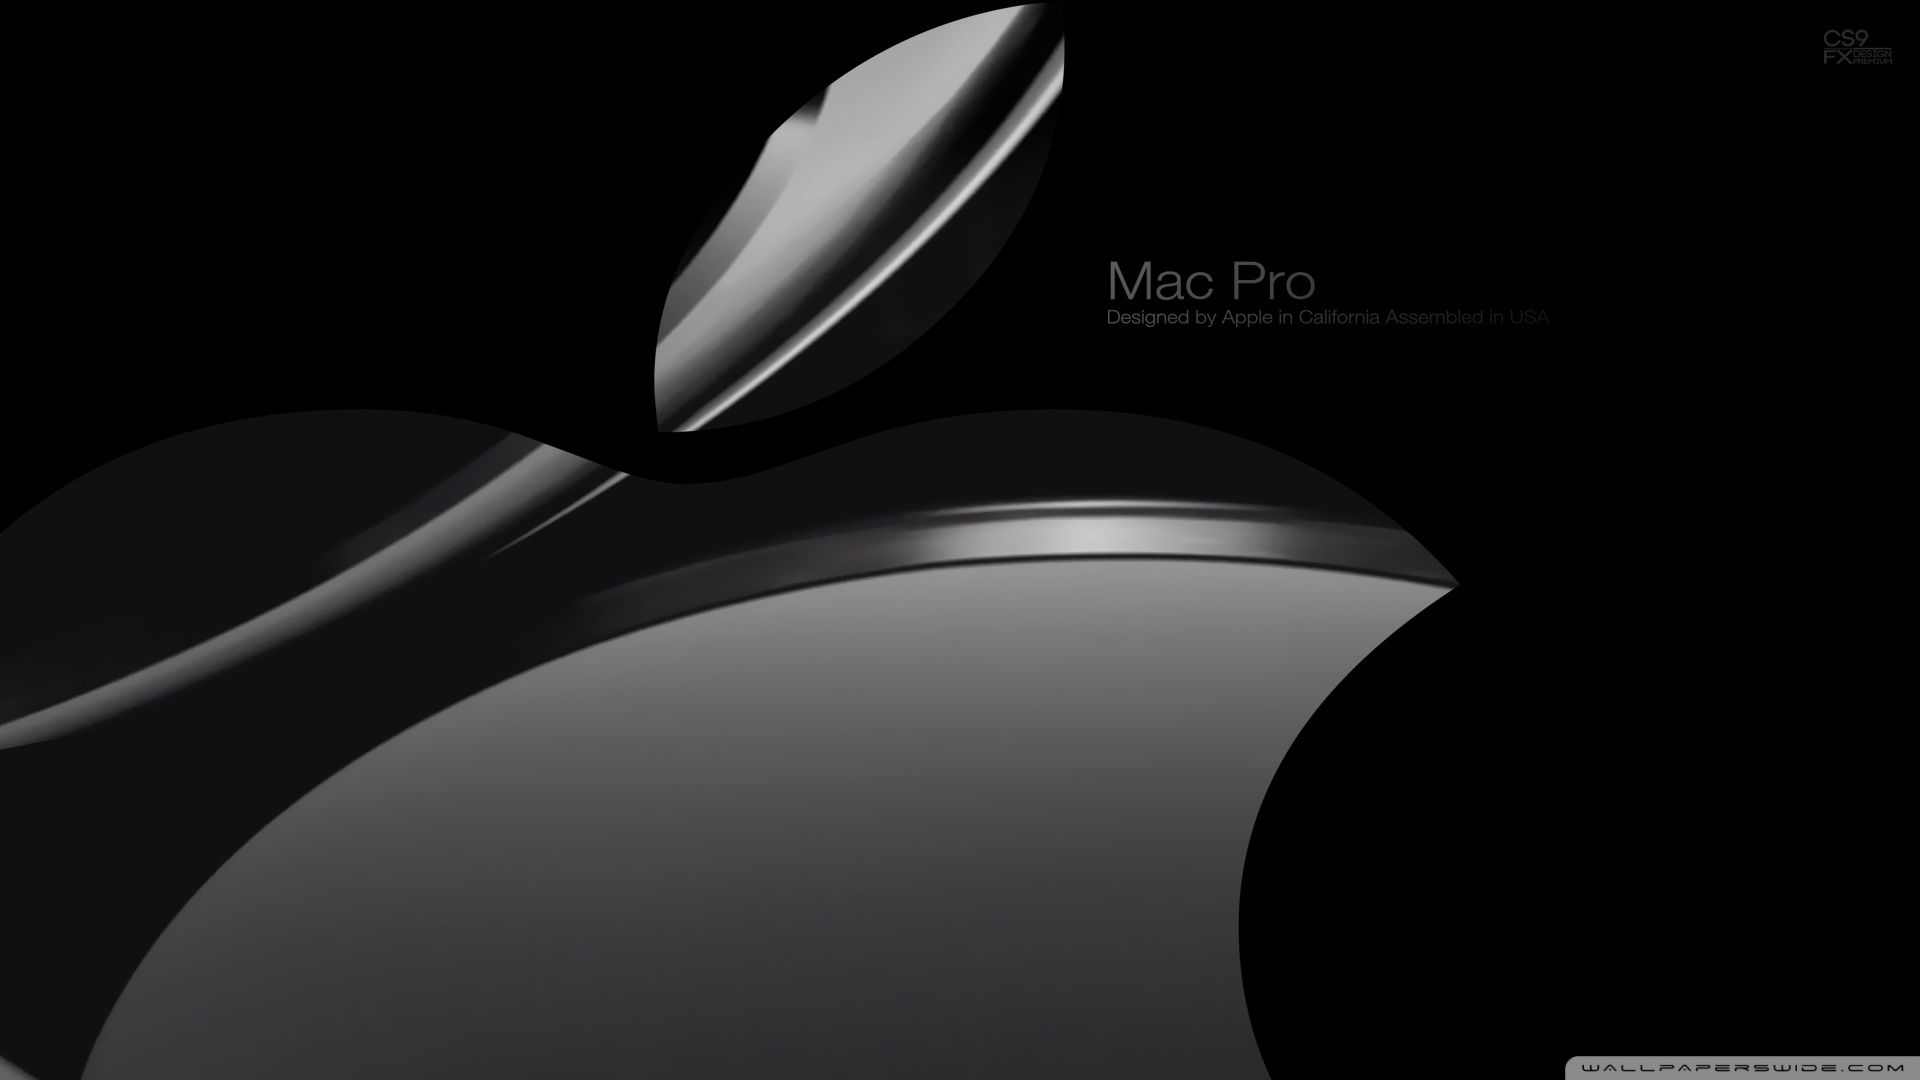 Fonds d'écran Mac Pro : tous les wallpapers Mac Pro